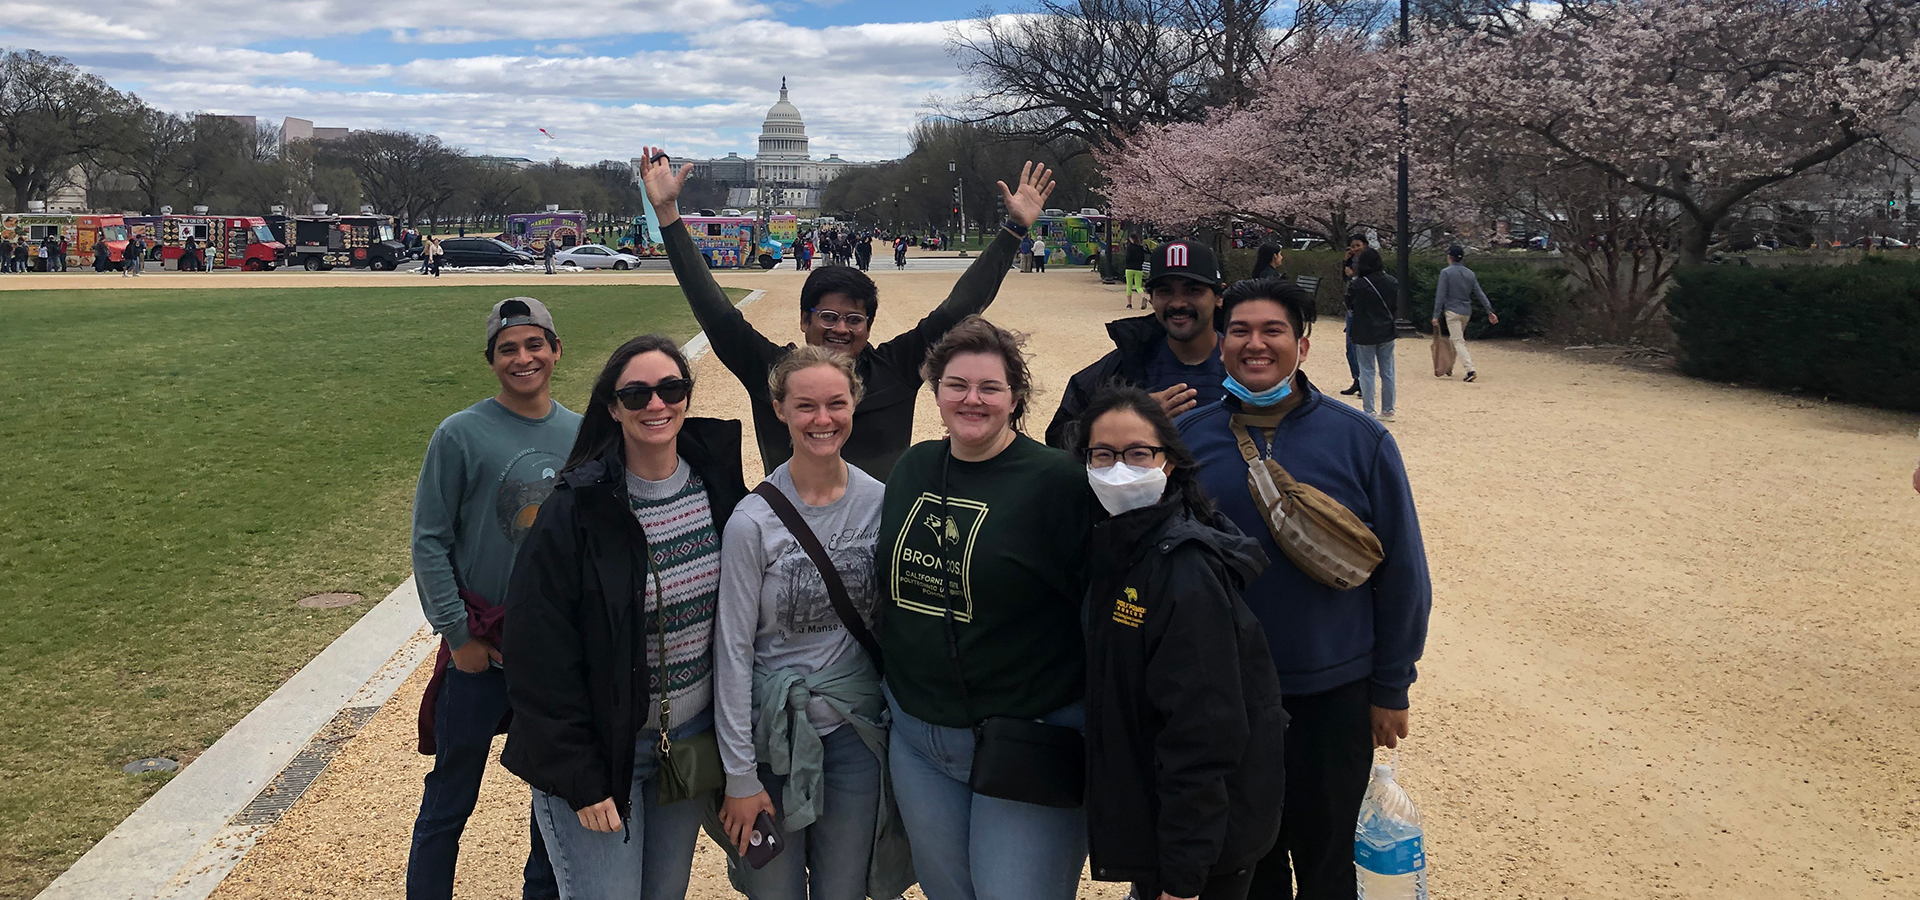 The team posing in Washington D.C.